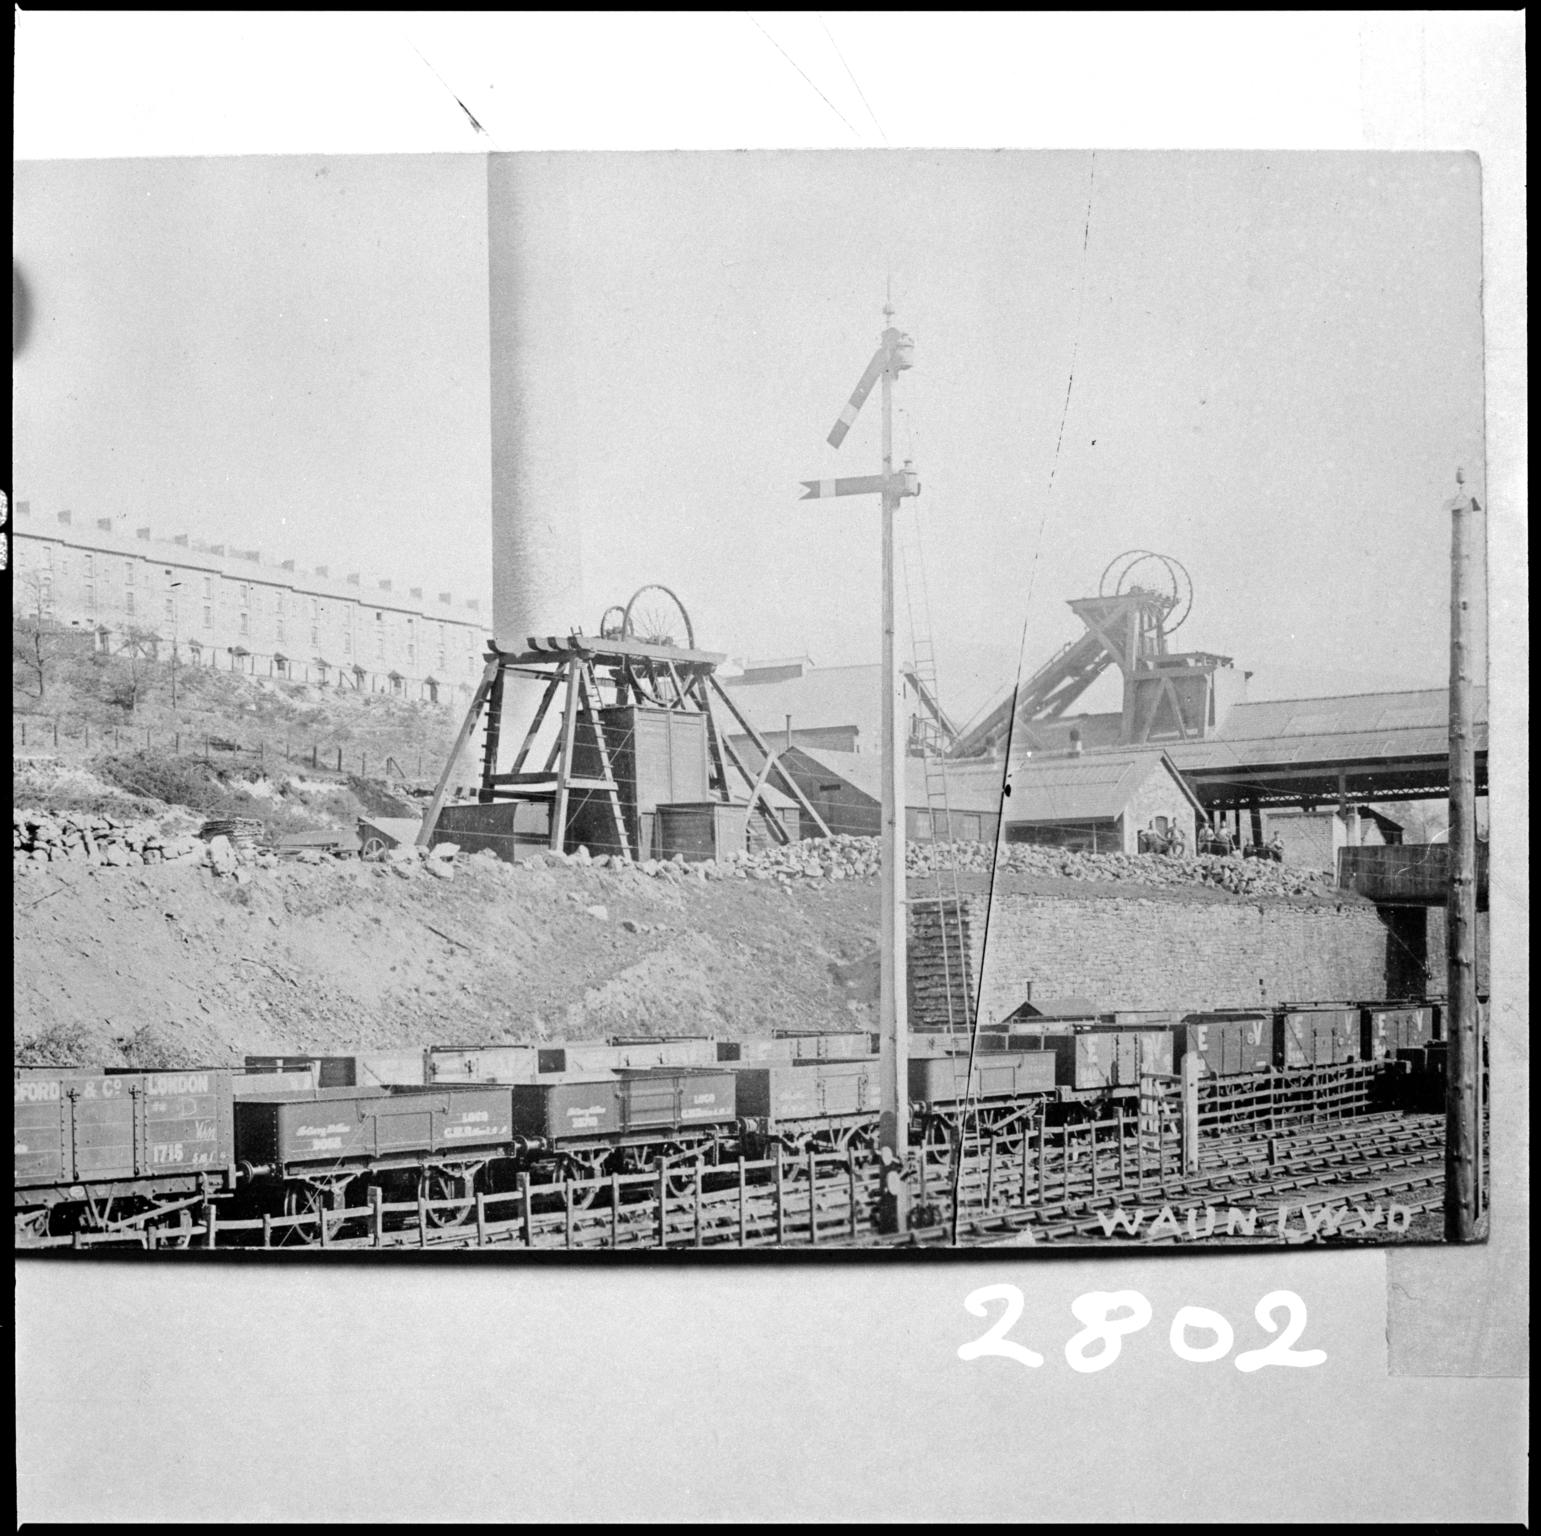 Waunlwyd Colliery, film negative